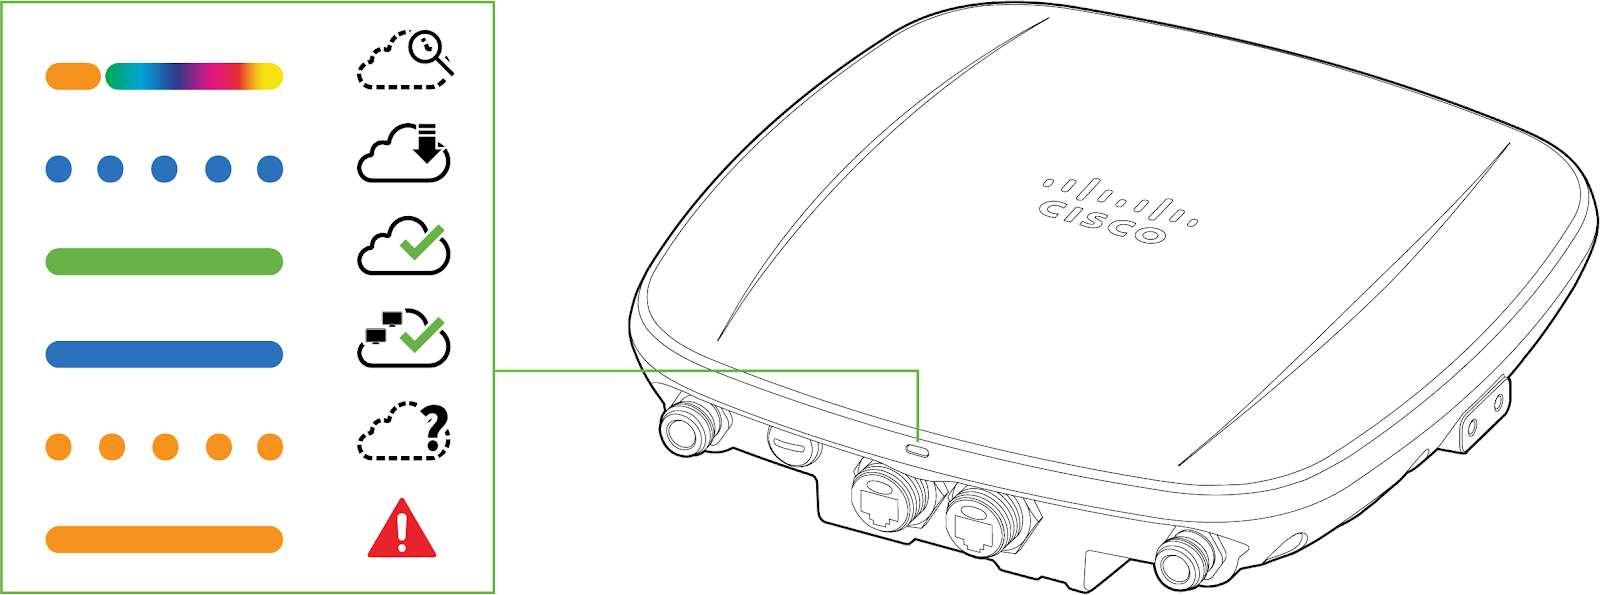 CW9163E LED indicator diagram.